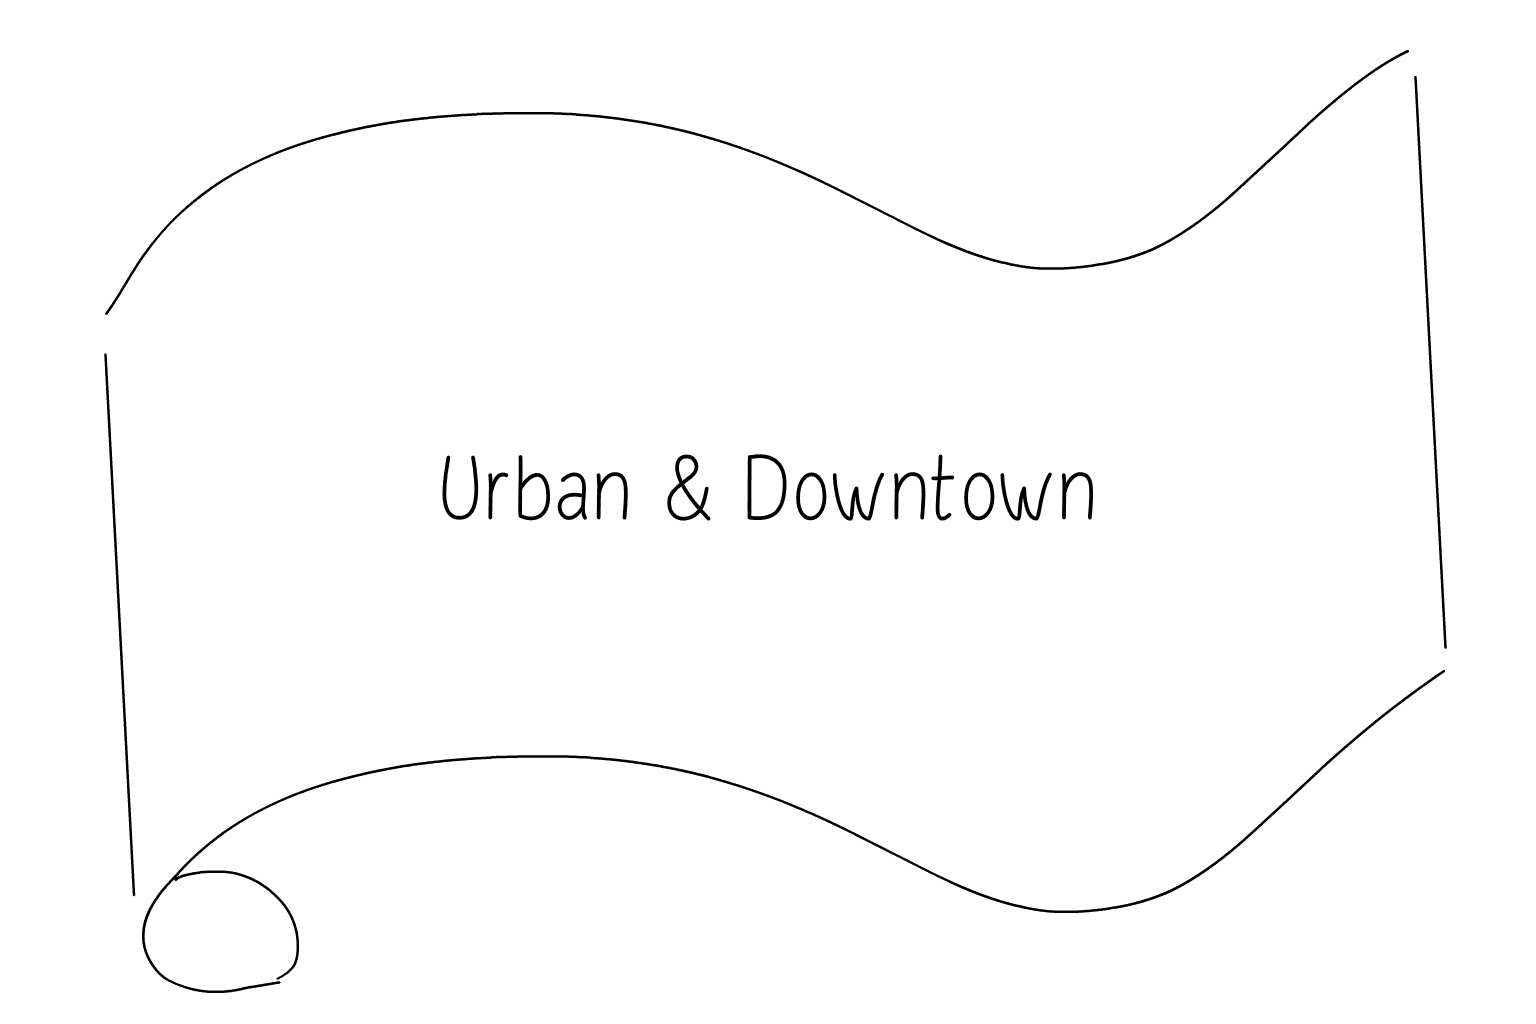 Illustration of Urban & Downtown